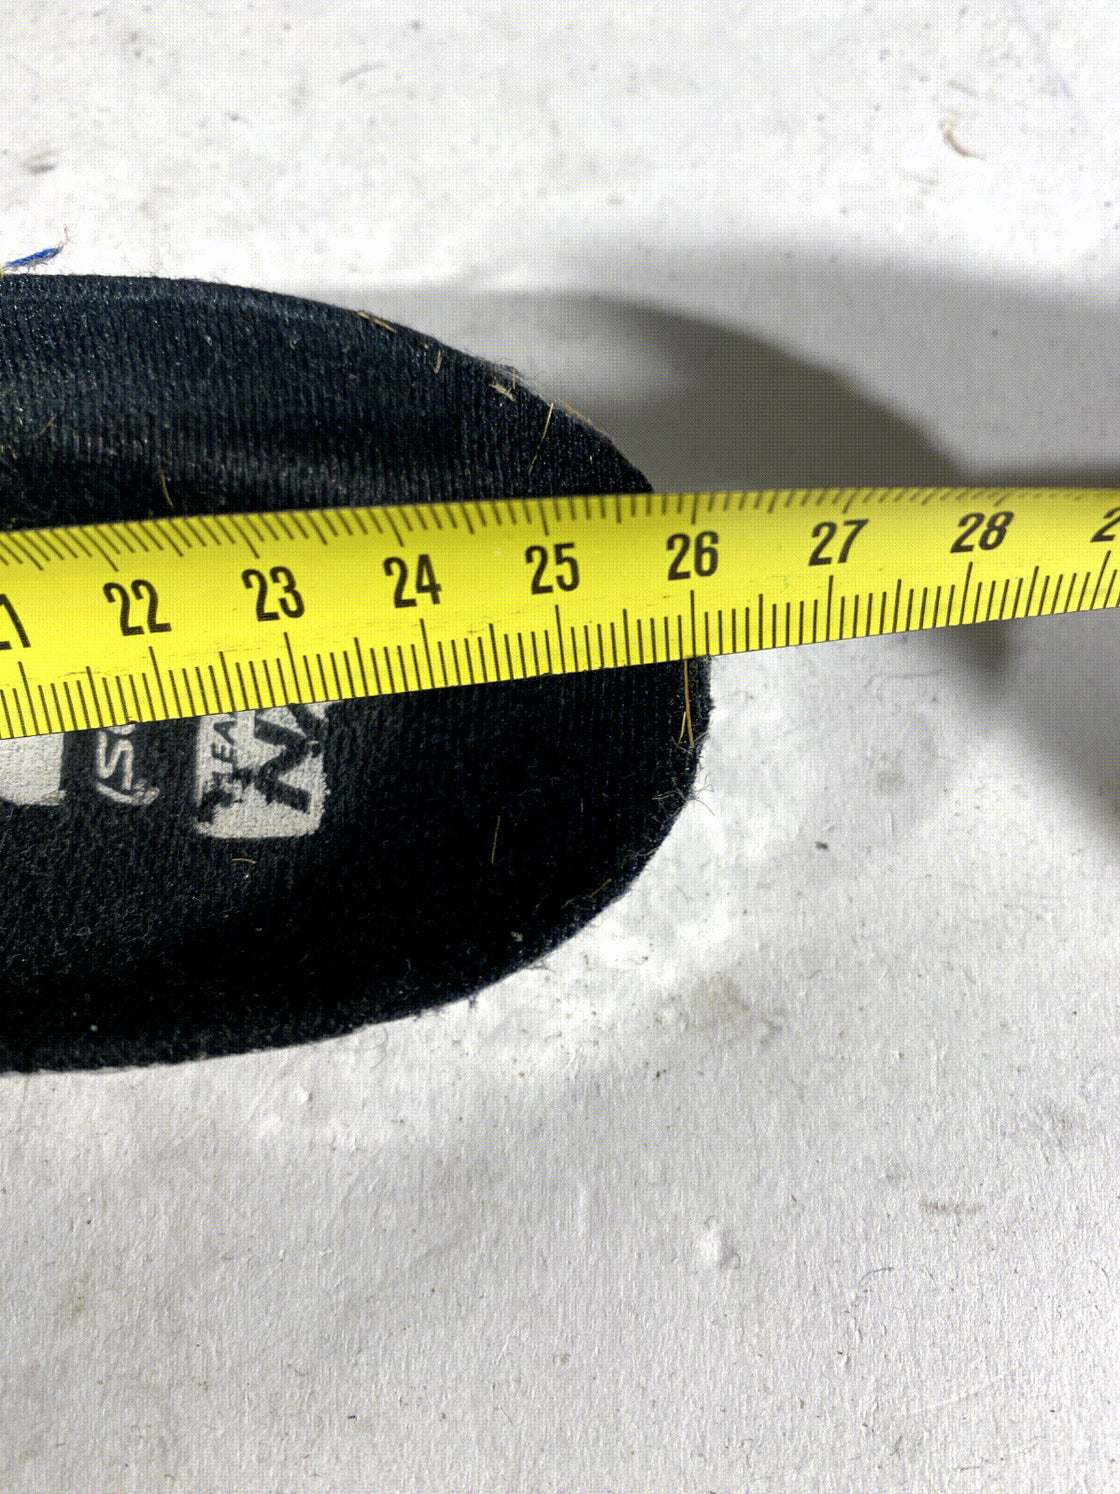 Fischer RCS Classic Nordic Cross Country Ski Boots Size EU41.5 US8.5 NNN